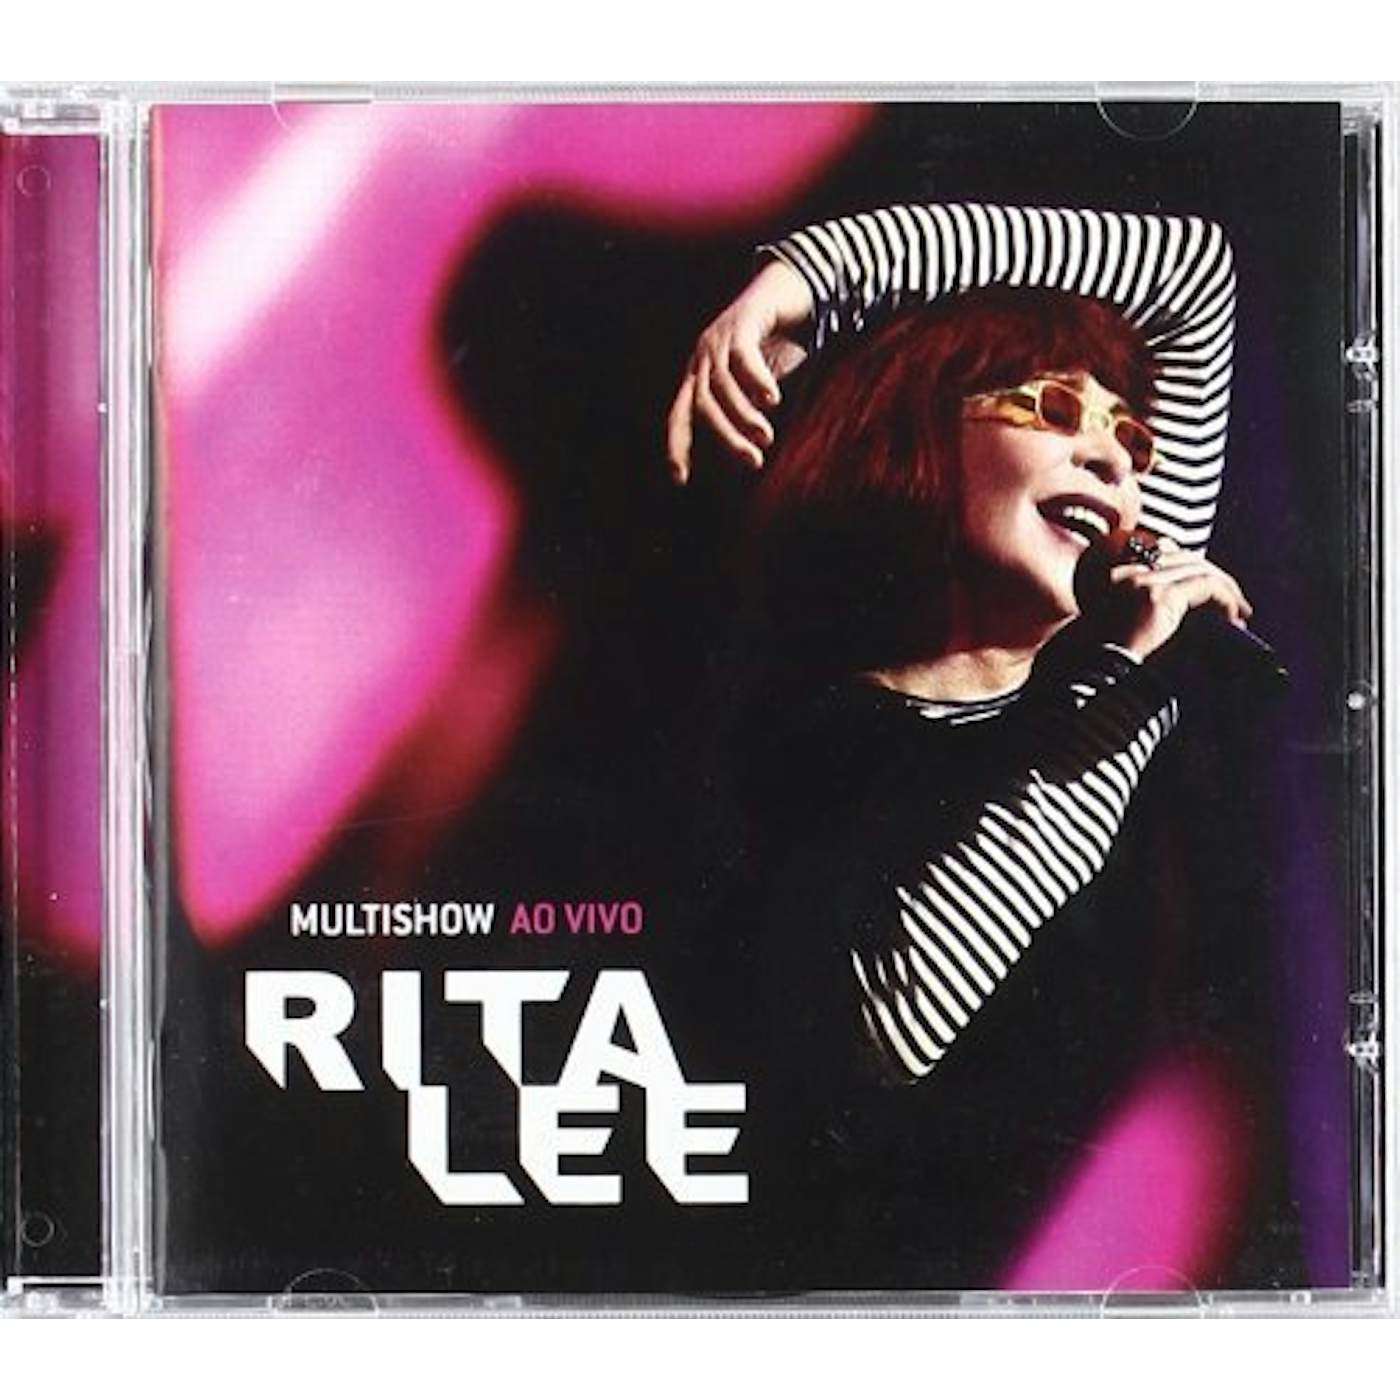 Rita Lee MULTISHOW AO VIVO CD